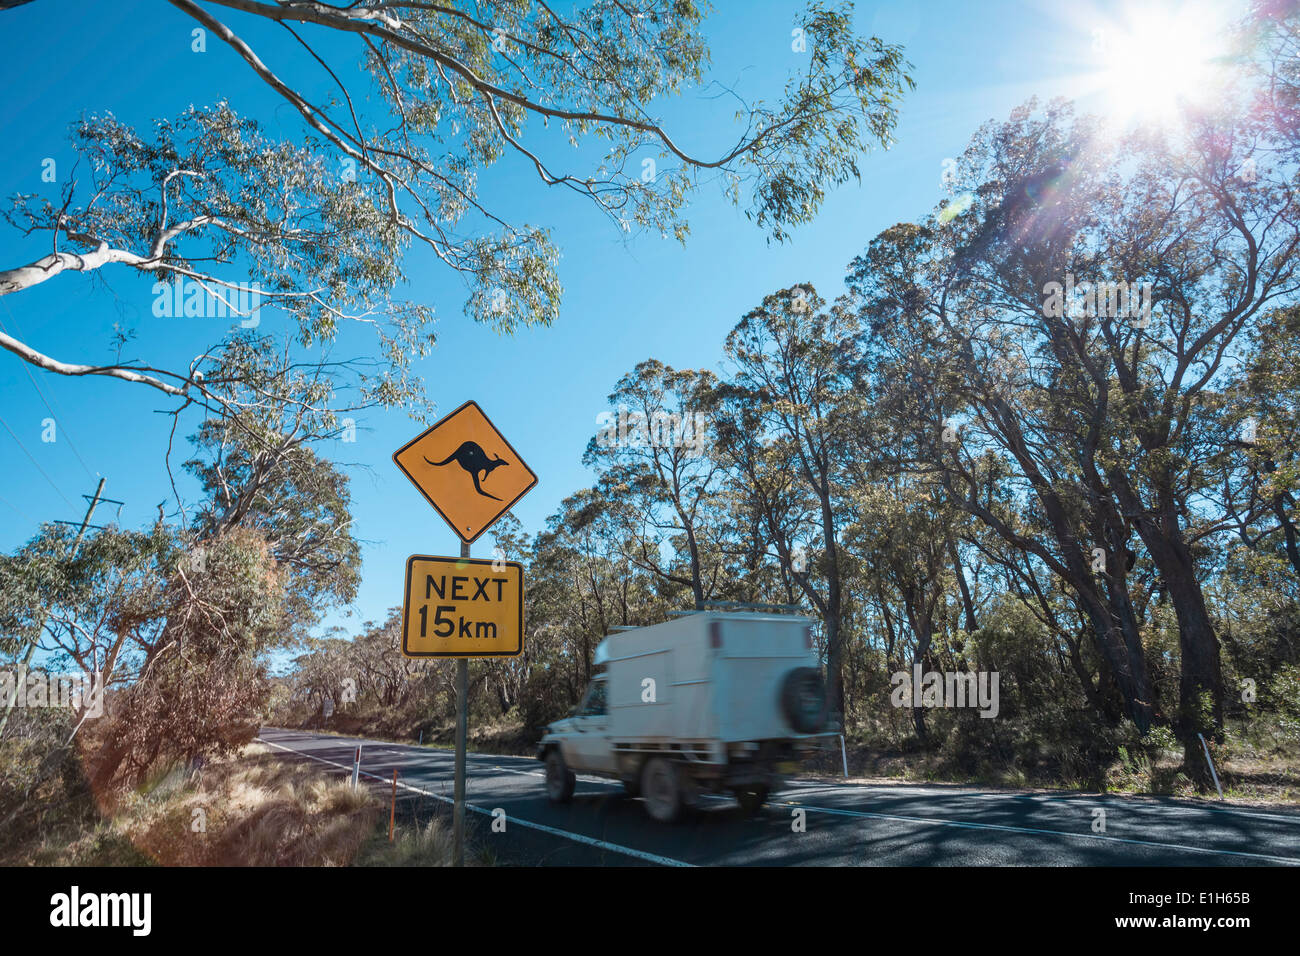 Kangaroo warning roadsign, New South Wales, Australia Stock Photo